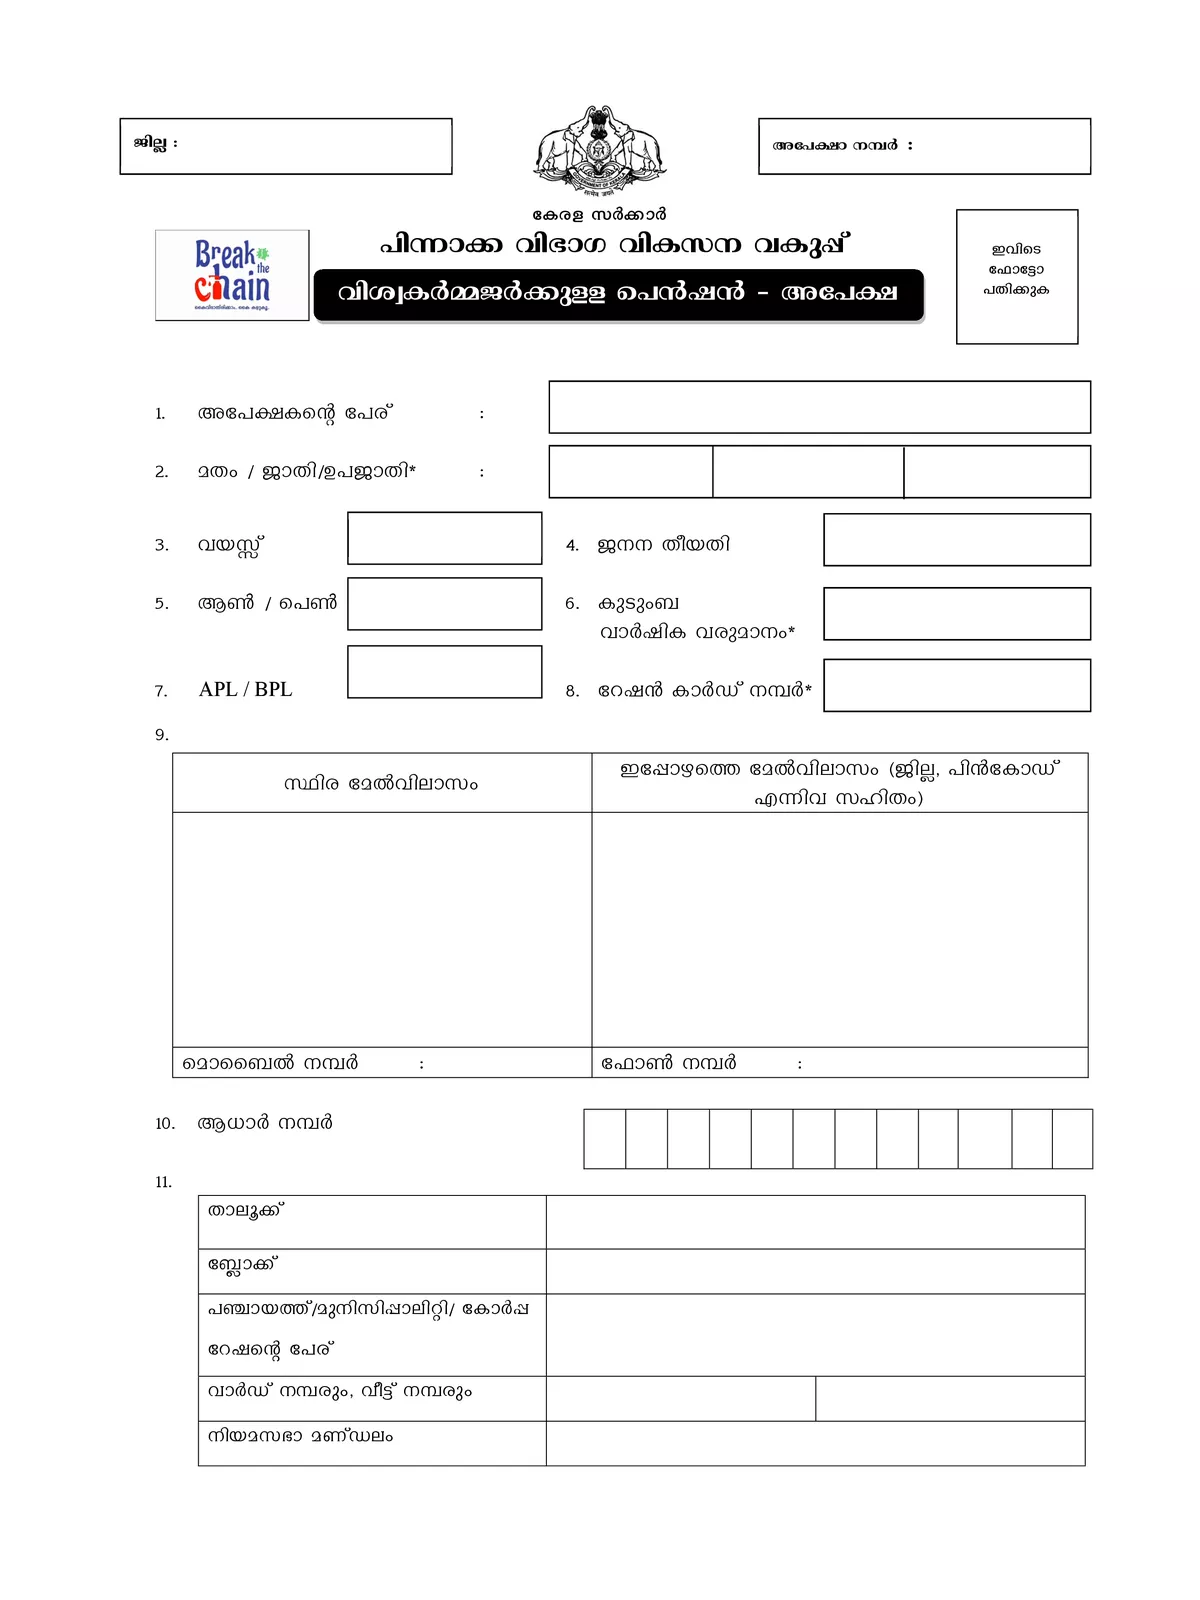 Vishwakarma Pension Scheme Form